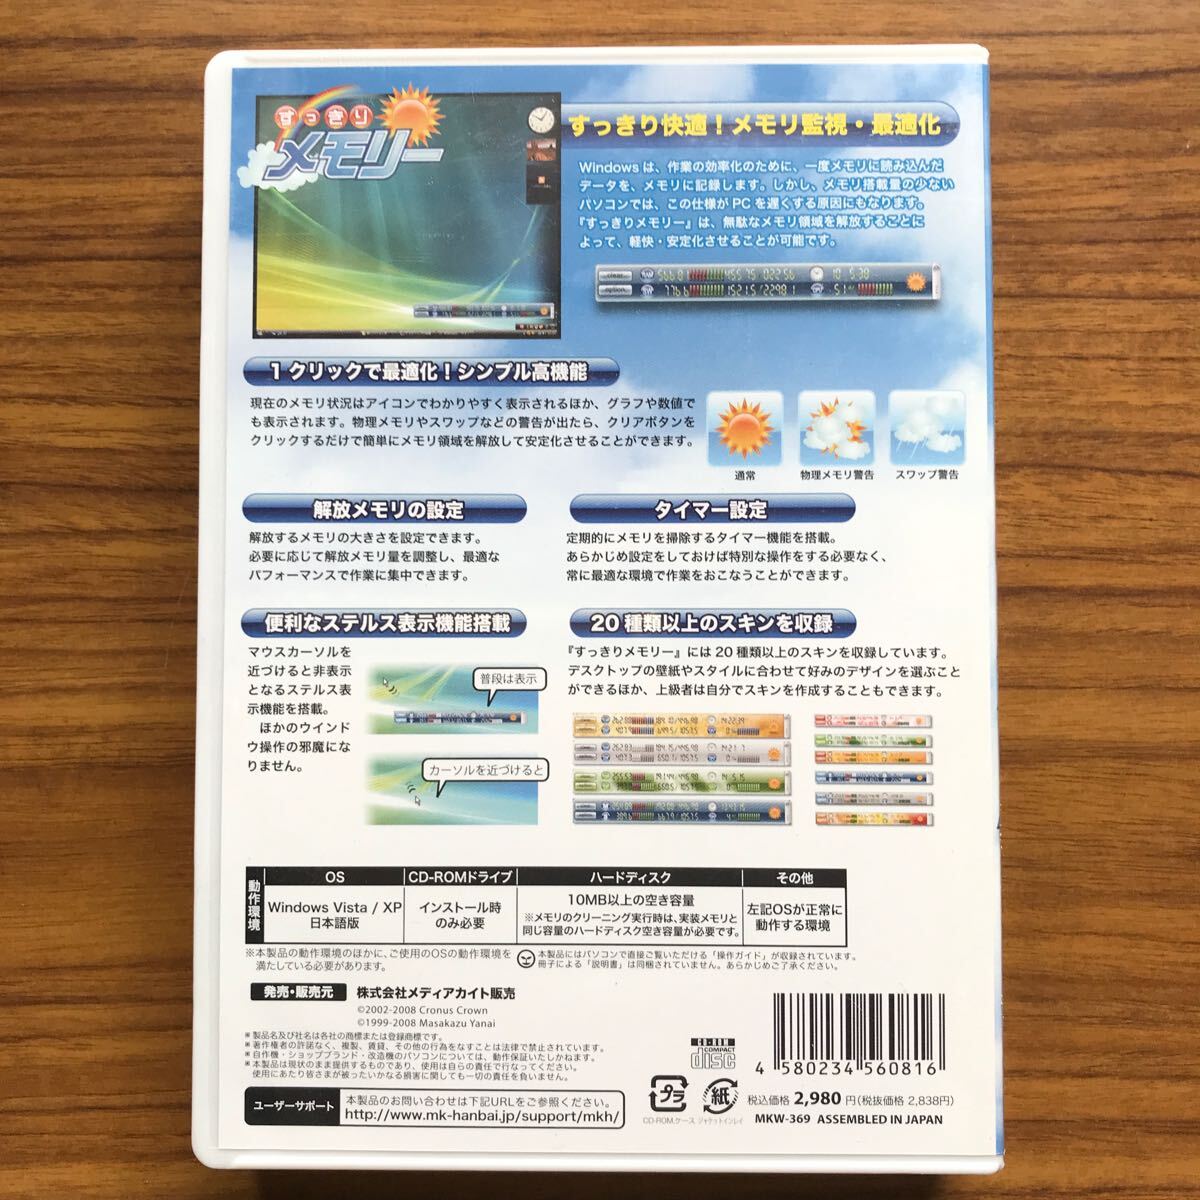  neat memory media kite WindowsVista/XP Japanese edition 